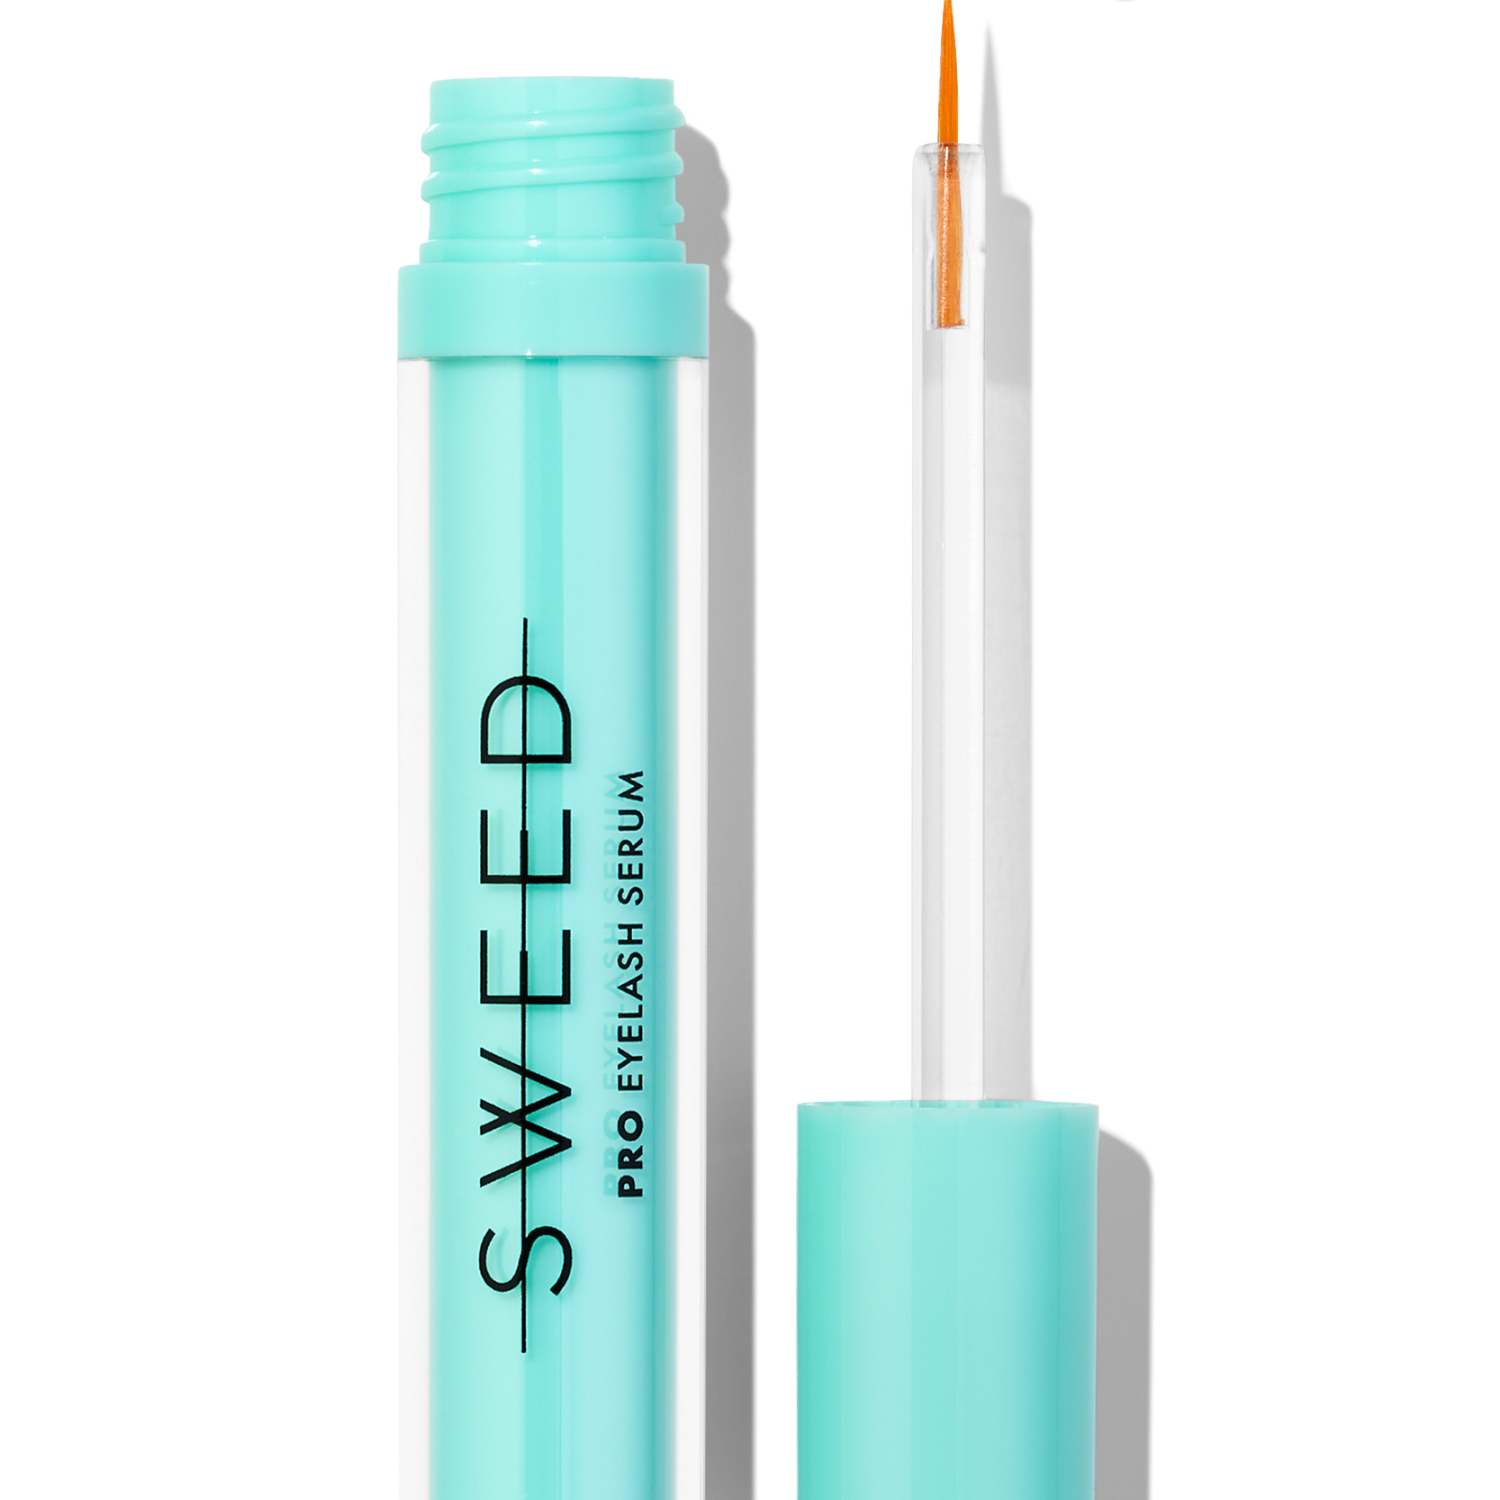 
  
  SWEED Pro Eyelash Growth Serum- LORDE beauty and cosmetics
  
